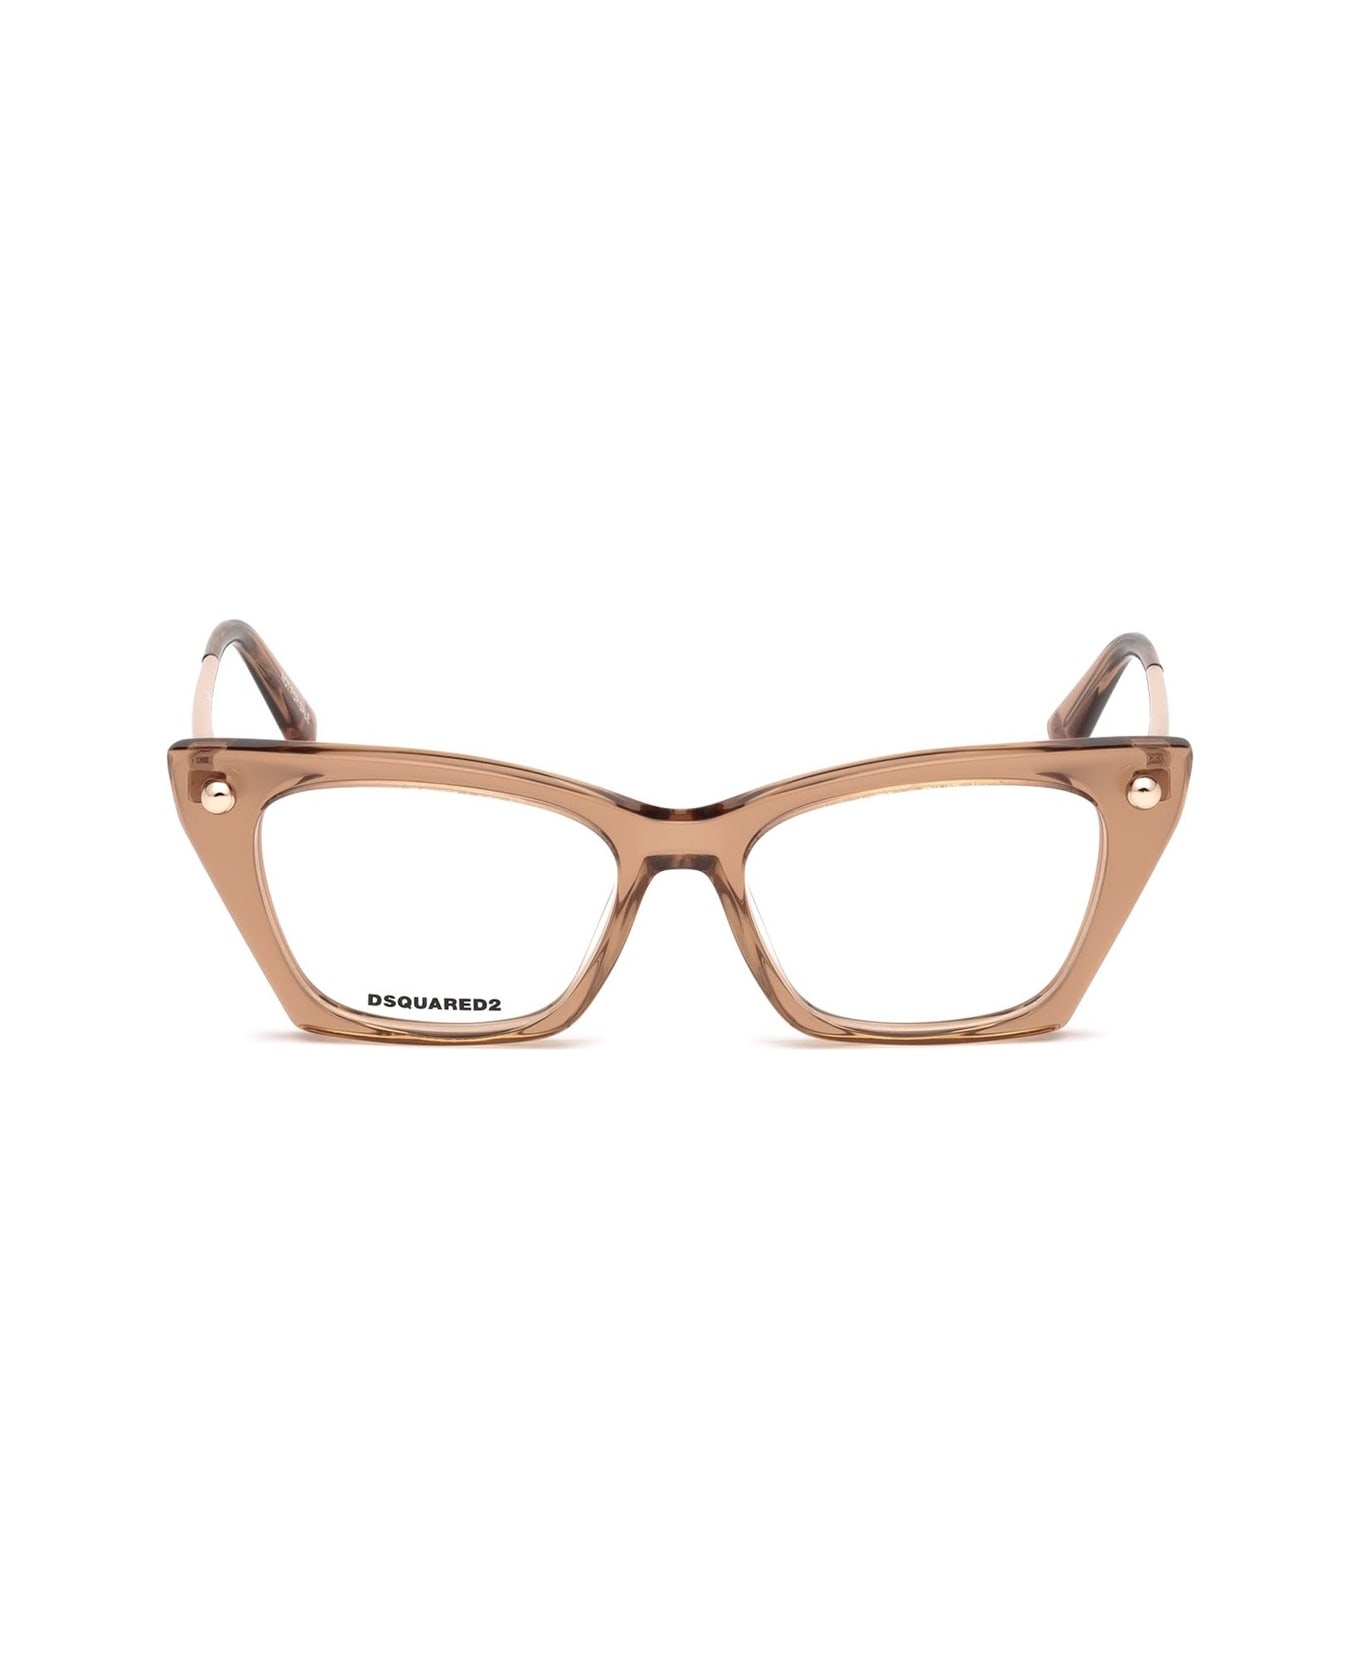 Dsquared2 Eyewear Dq5245 Glasses - Beige アイウェア